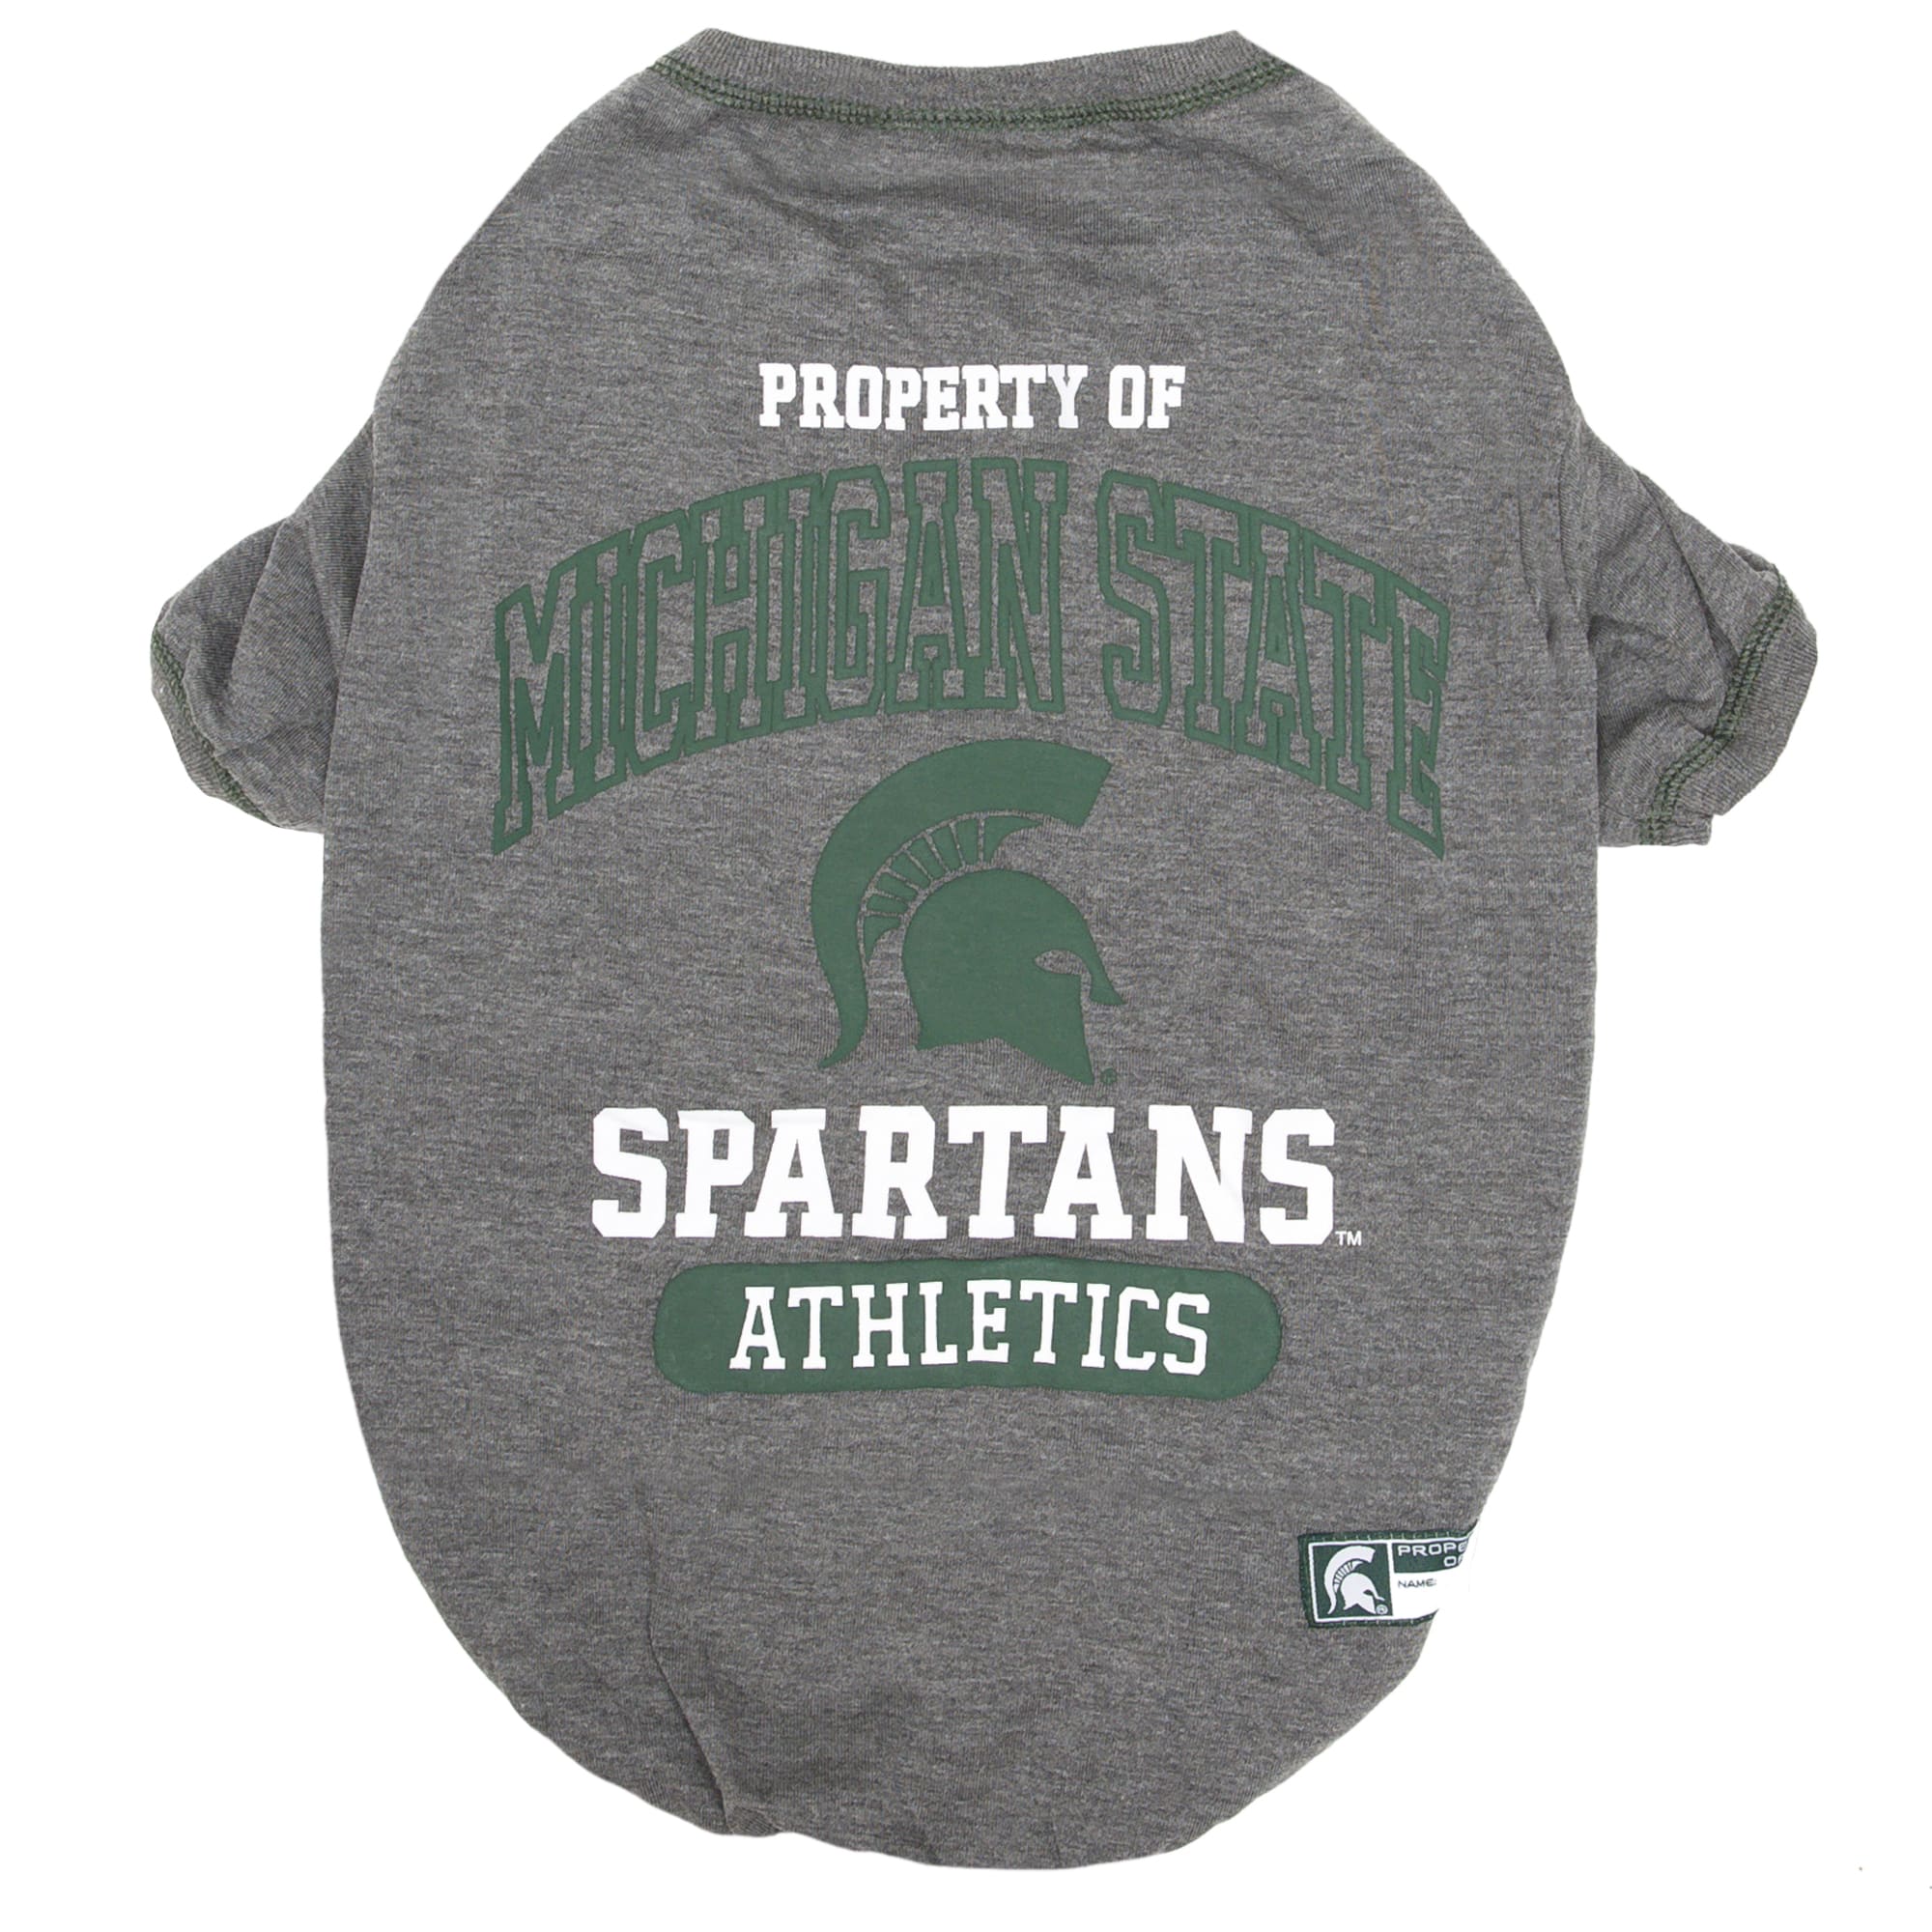 Michigan State Spartans NCAA Hoodie Dog Pet Tee T-Shirt